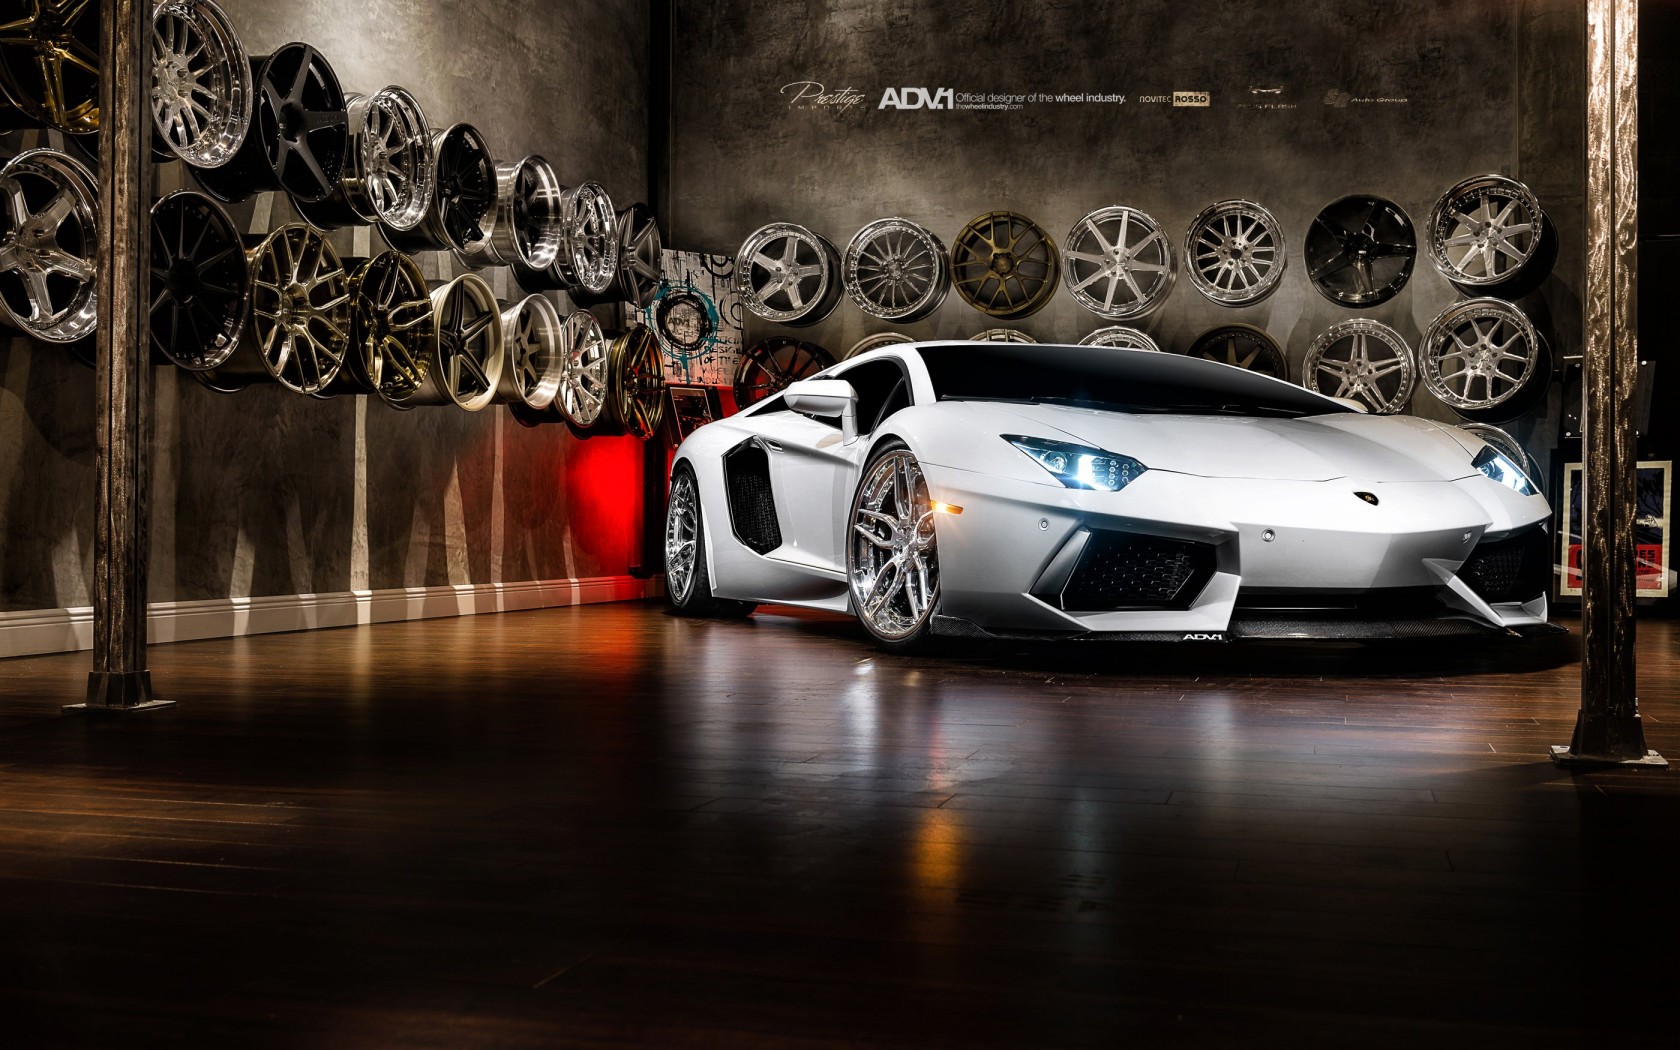 Lamborghini Aventador On ADV.1 Wheels Wallpaper for Desktop 1680x1050